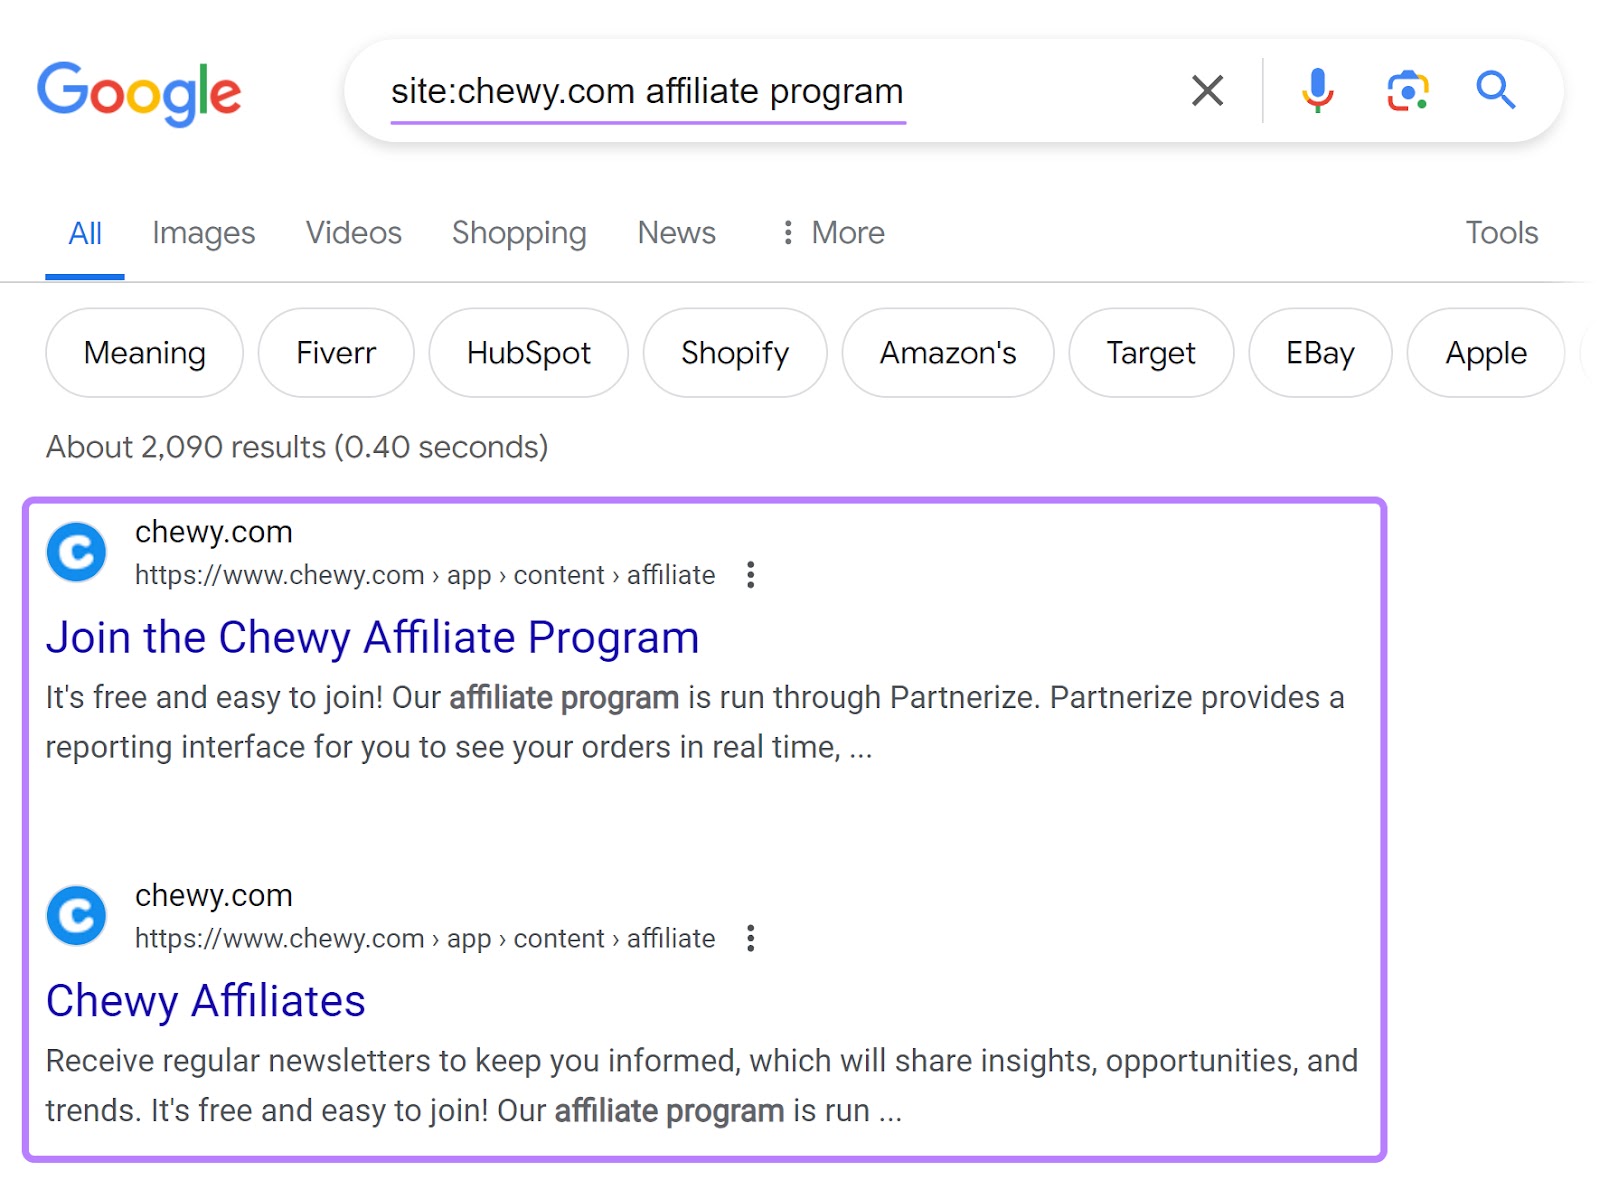 Google's SERP for “site:chewy.com affiliate program" query